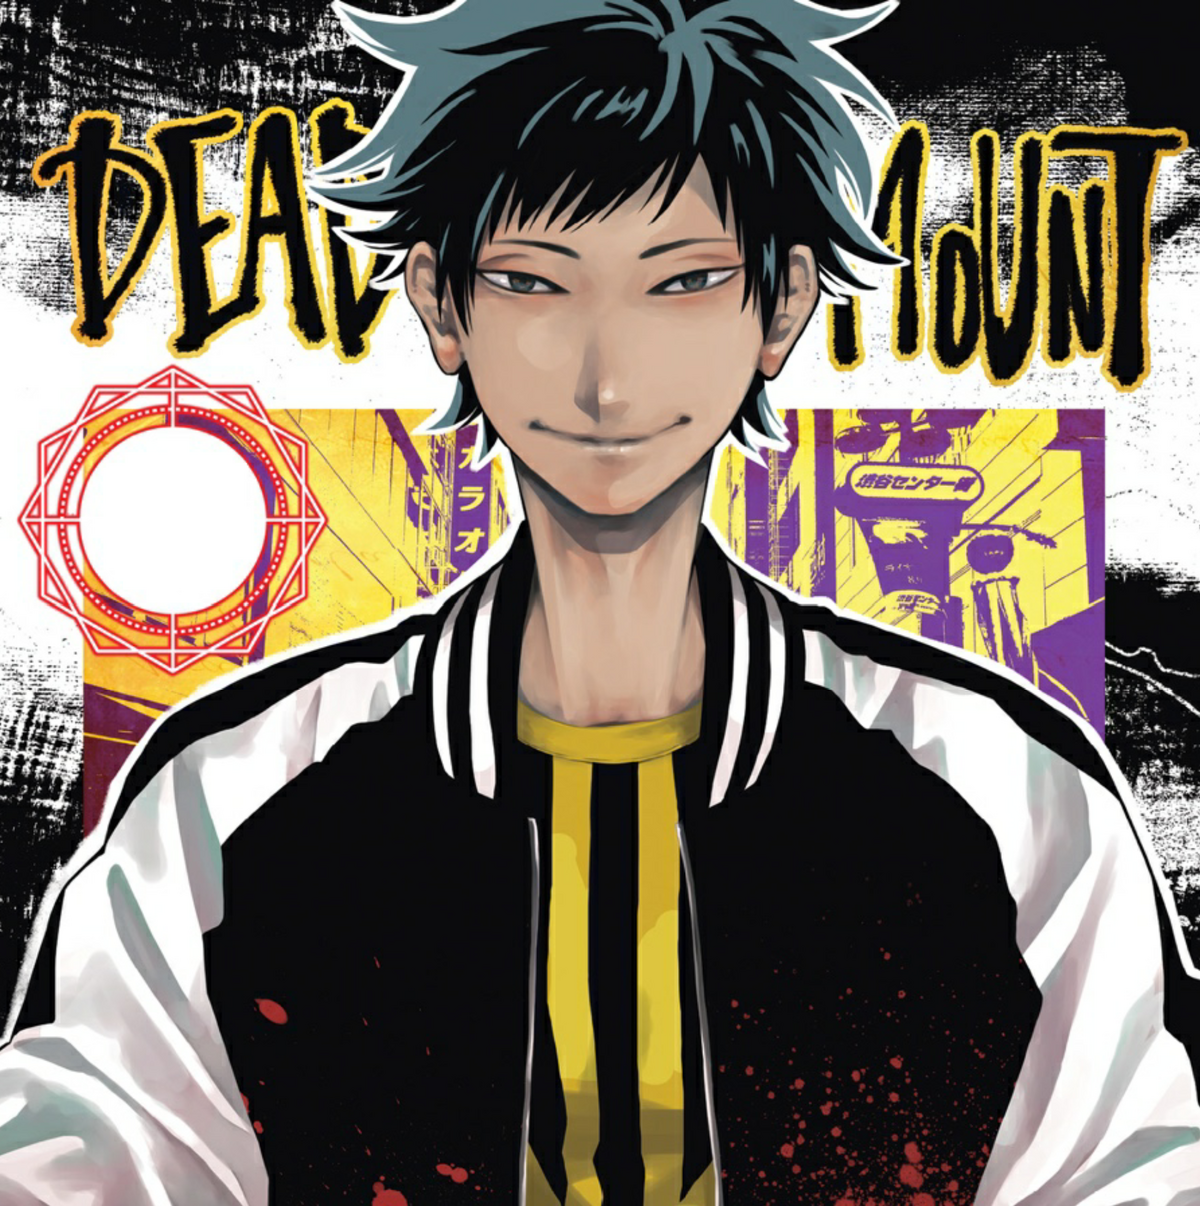 Volume 9, Dead Mount Death Play Wiki